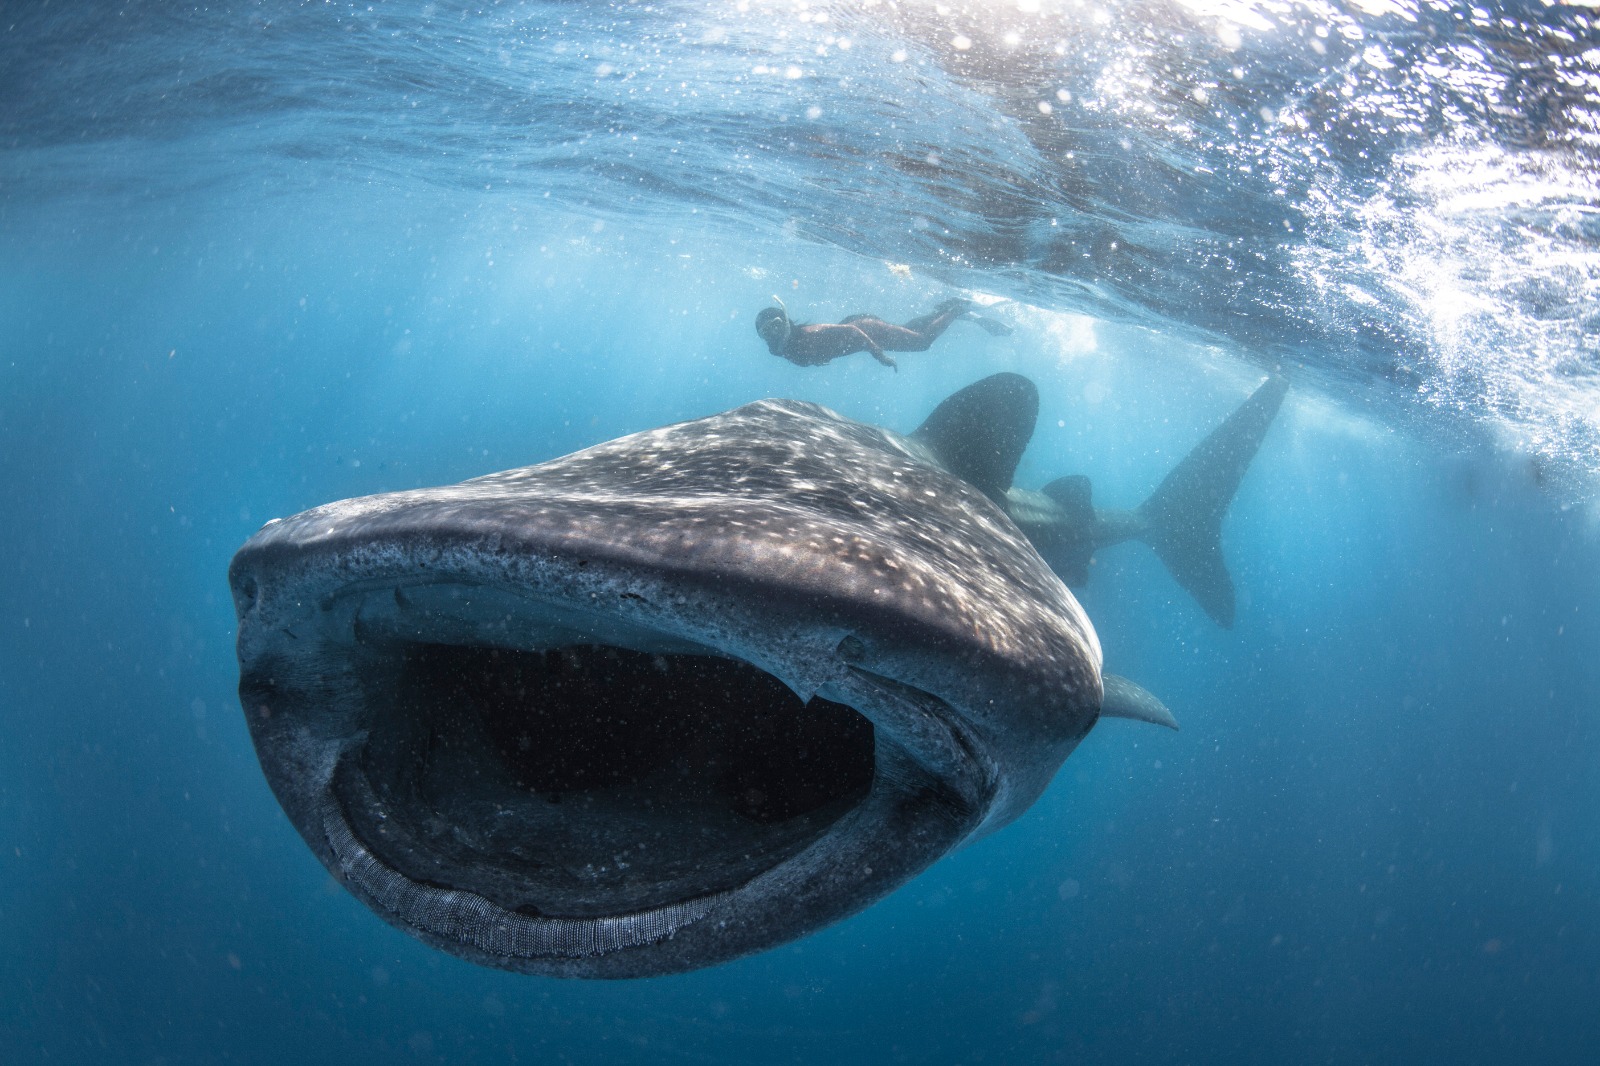 Whale Shark (Rhincodon Typus) image by Raymond Man